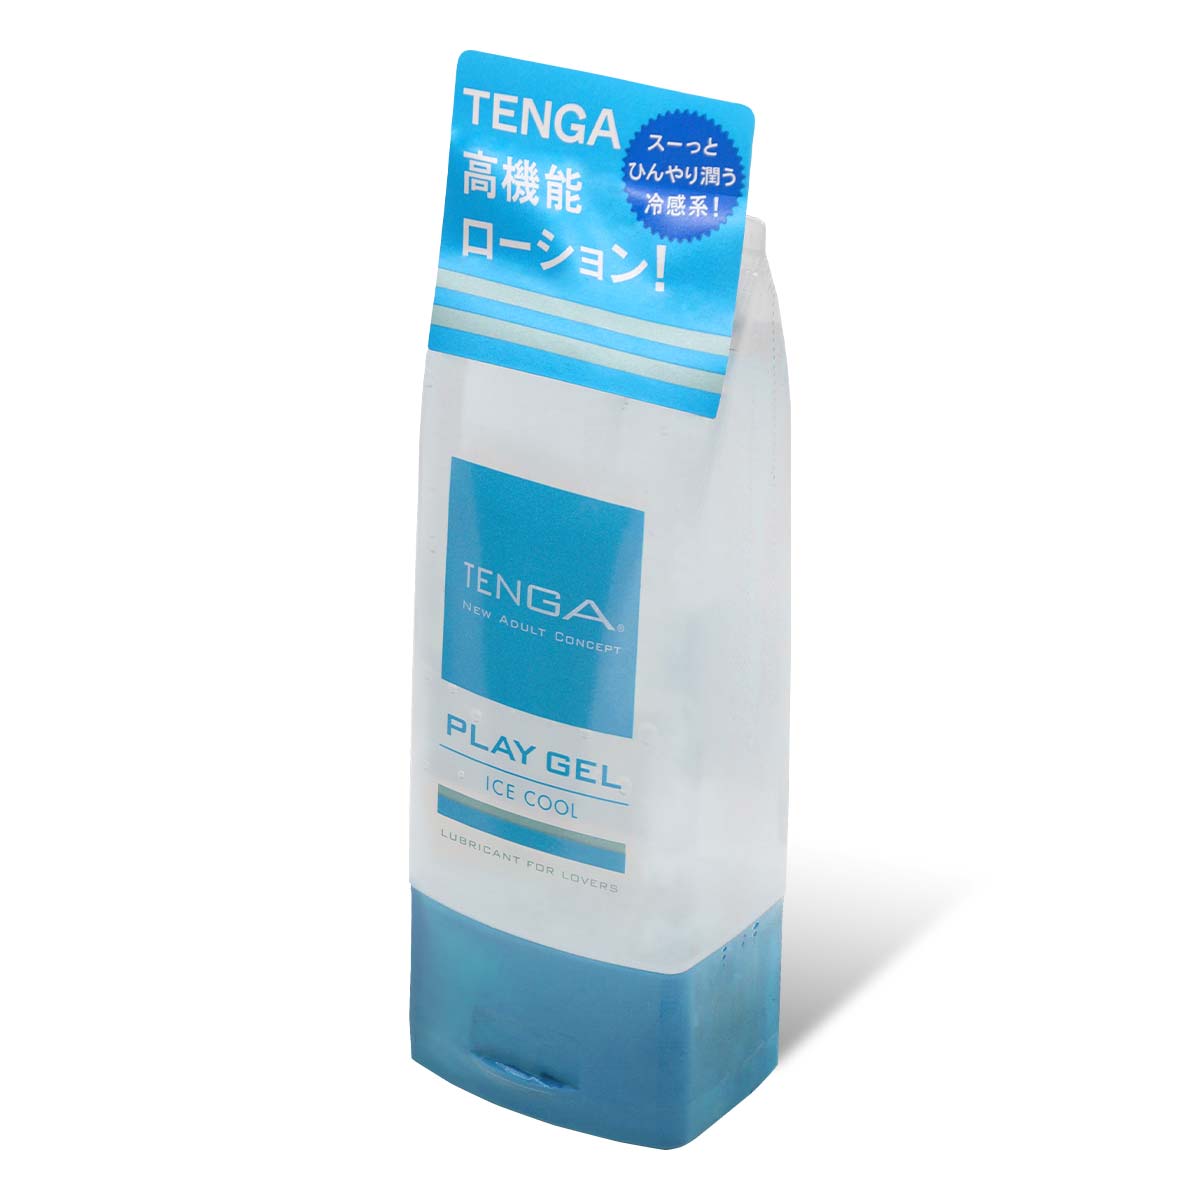 TENGA PLAY GEL ICE COOL 160ml Water-based Lubricant-p_1